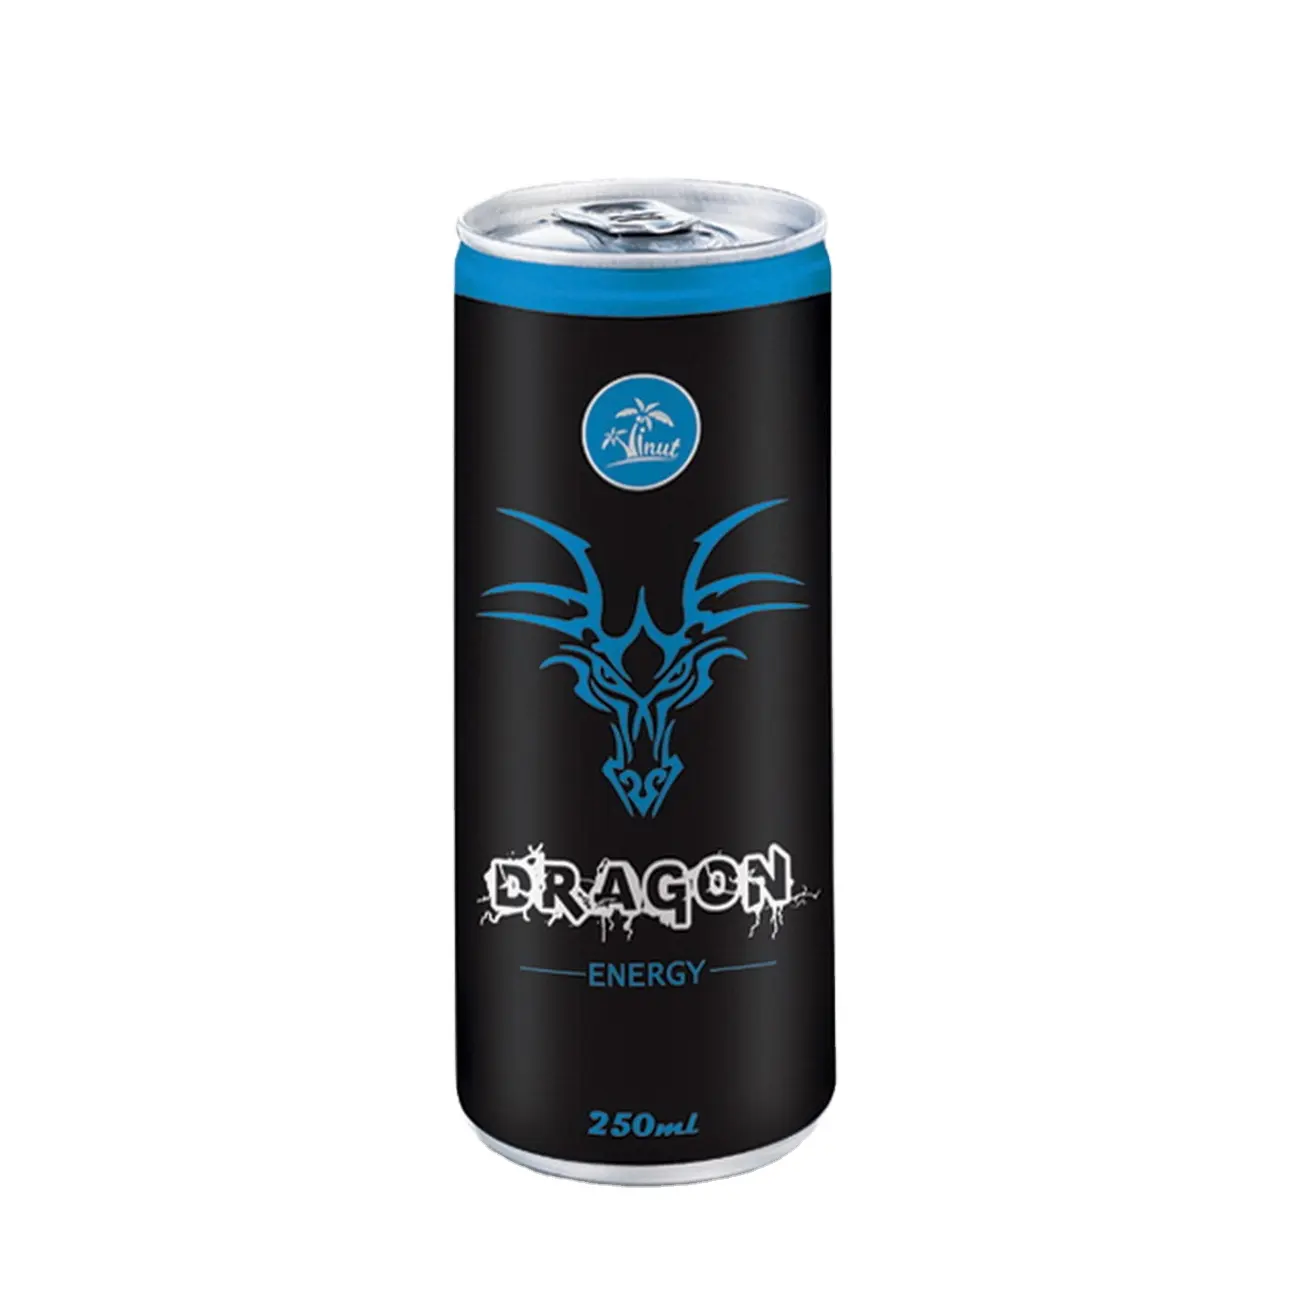 Dragon uk-bebida energética saludable, 250ml